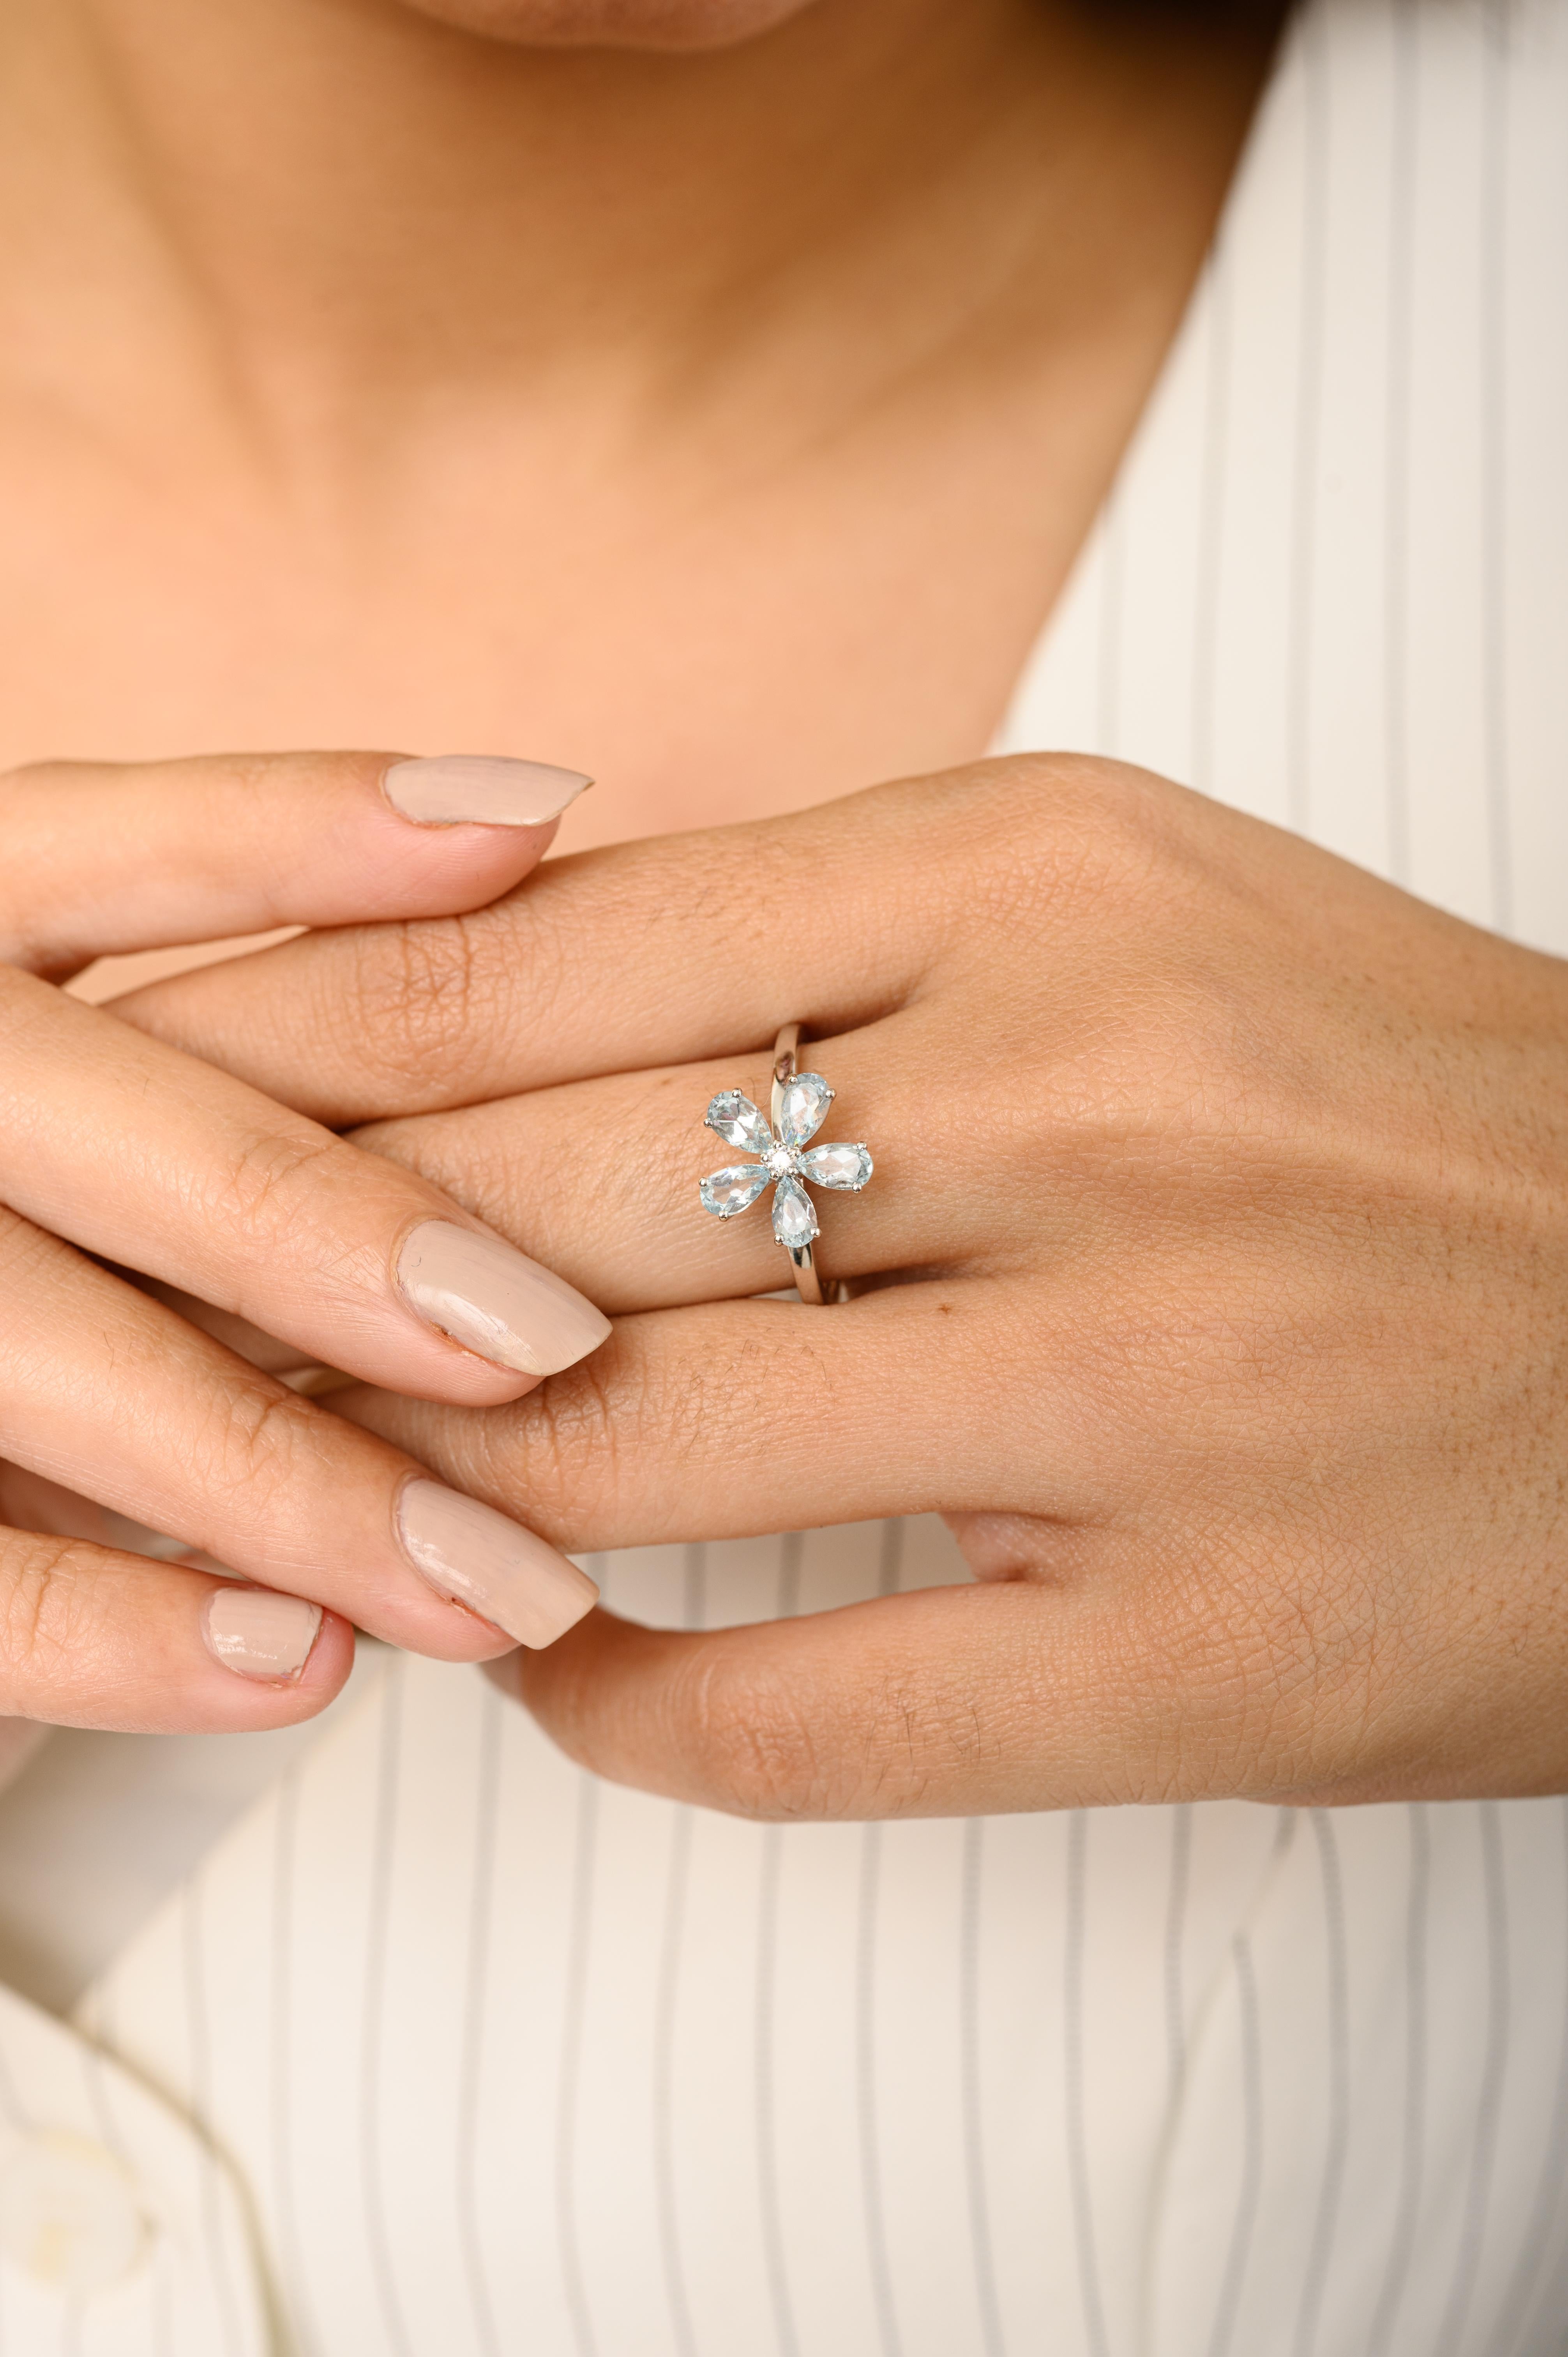 For Sale:  Natural Aquamarine Diamond Spring Flower Ring in 18k White Gold for Her 6